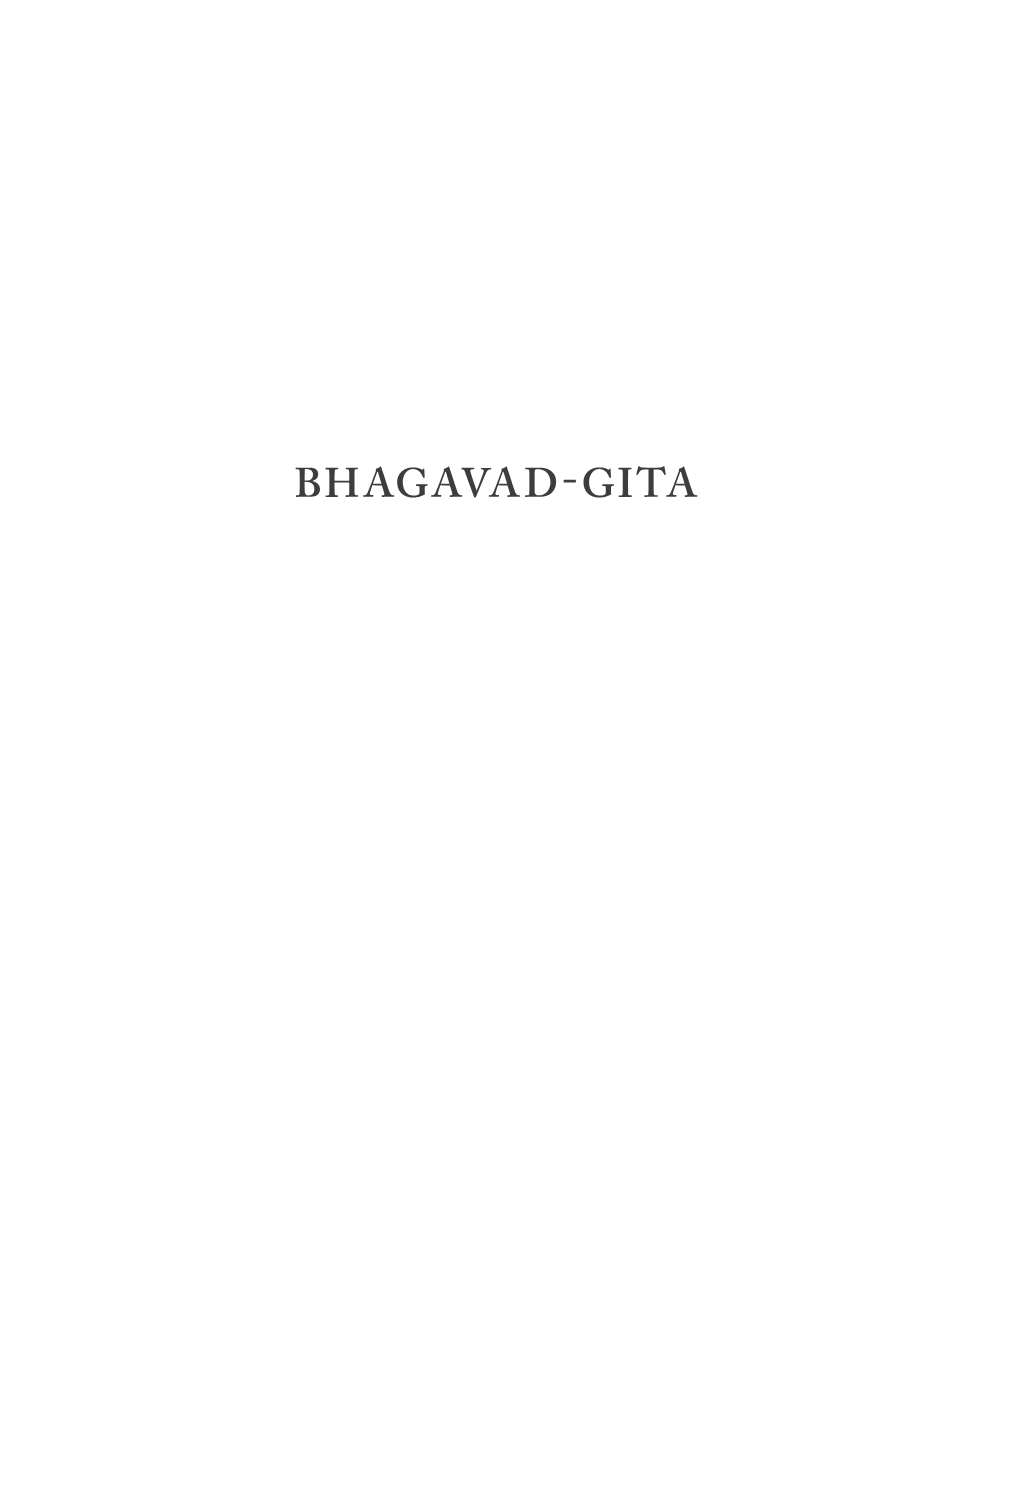 Bhagavad-Gita: the Oxford Centre for Hindu Studies Guide